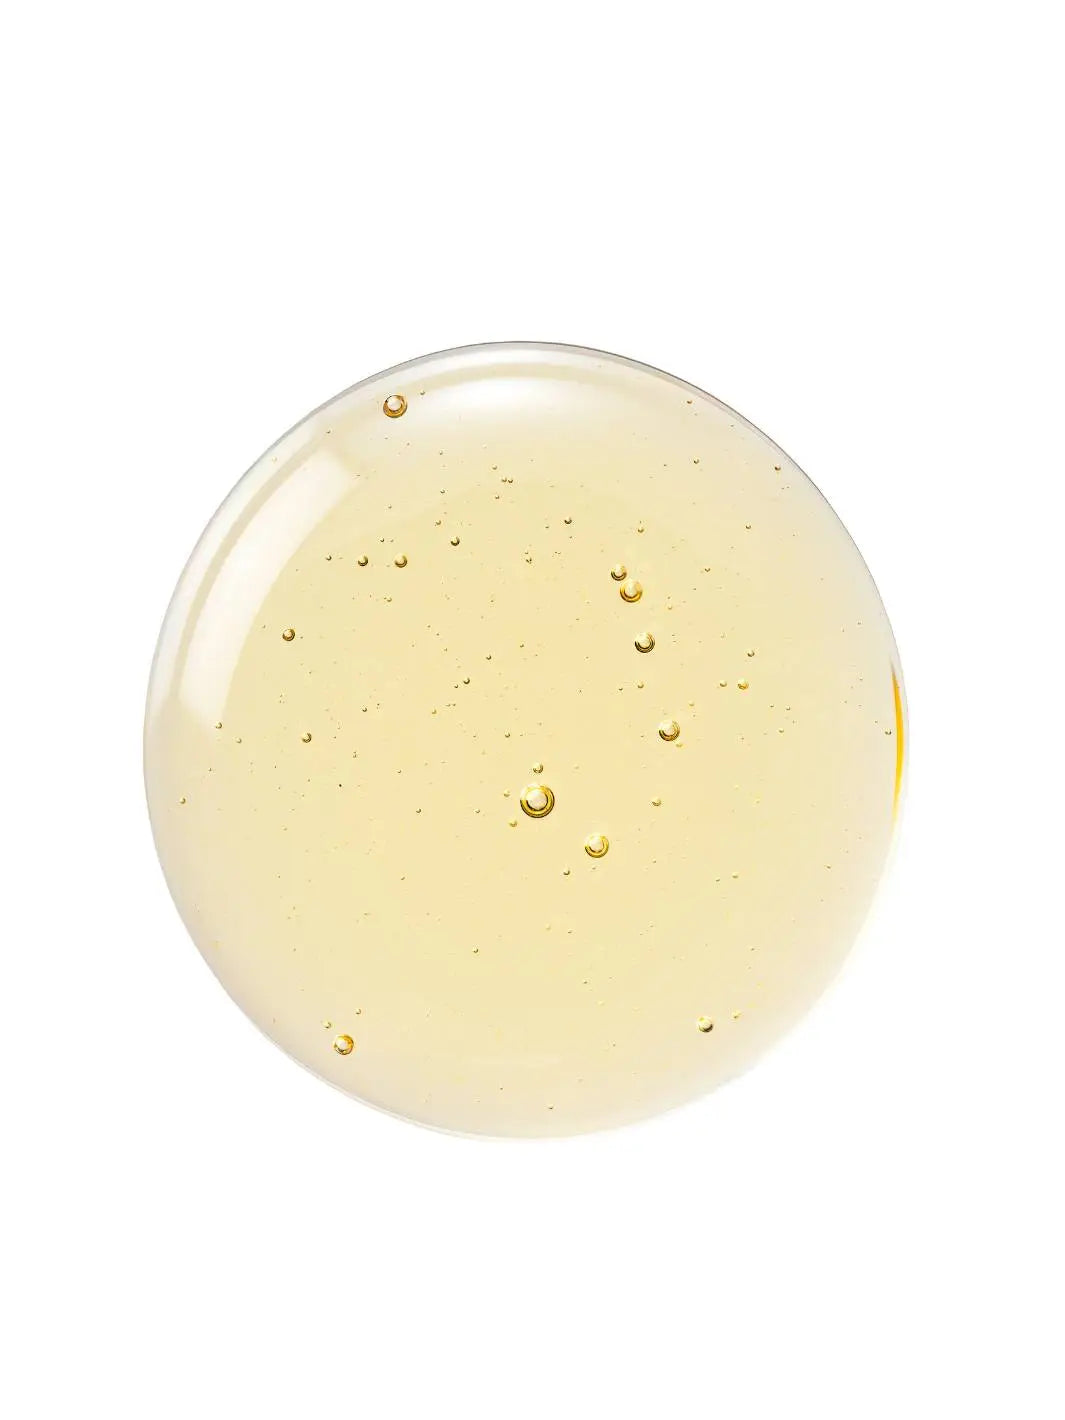 Notre huile protectrice MIDI12 est naturelle, et ne contient aucunes nanoparticules.